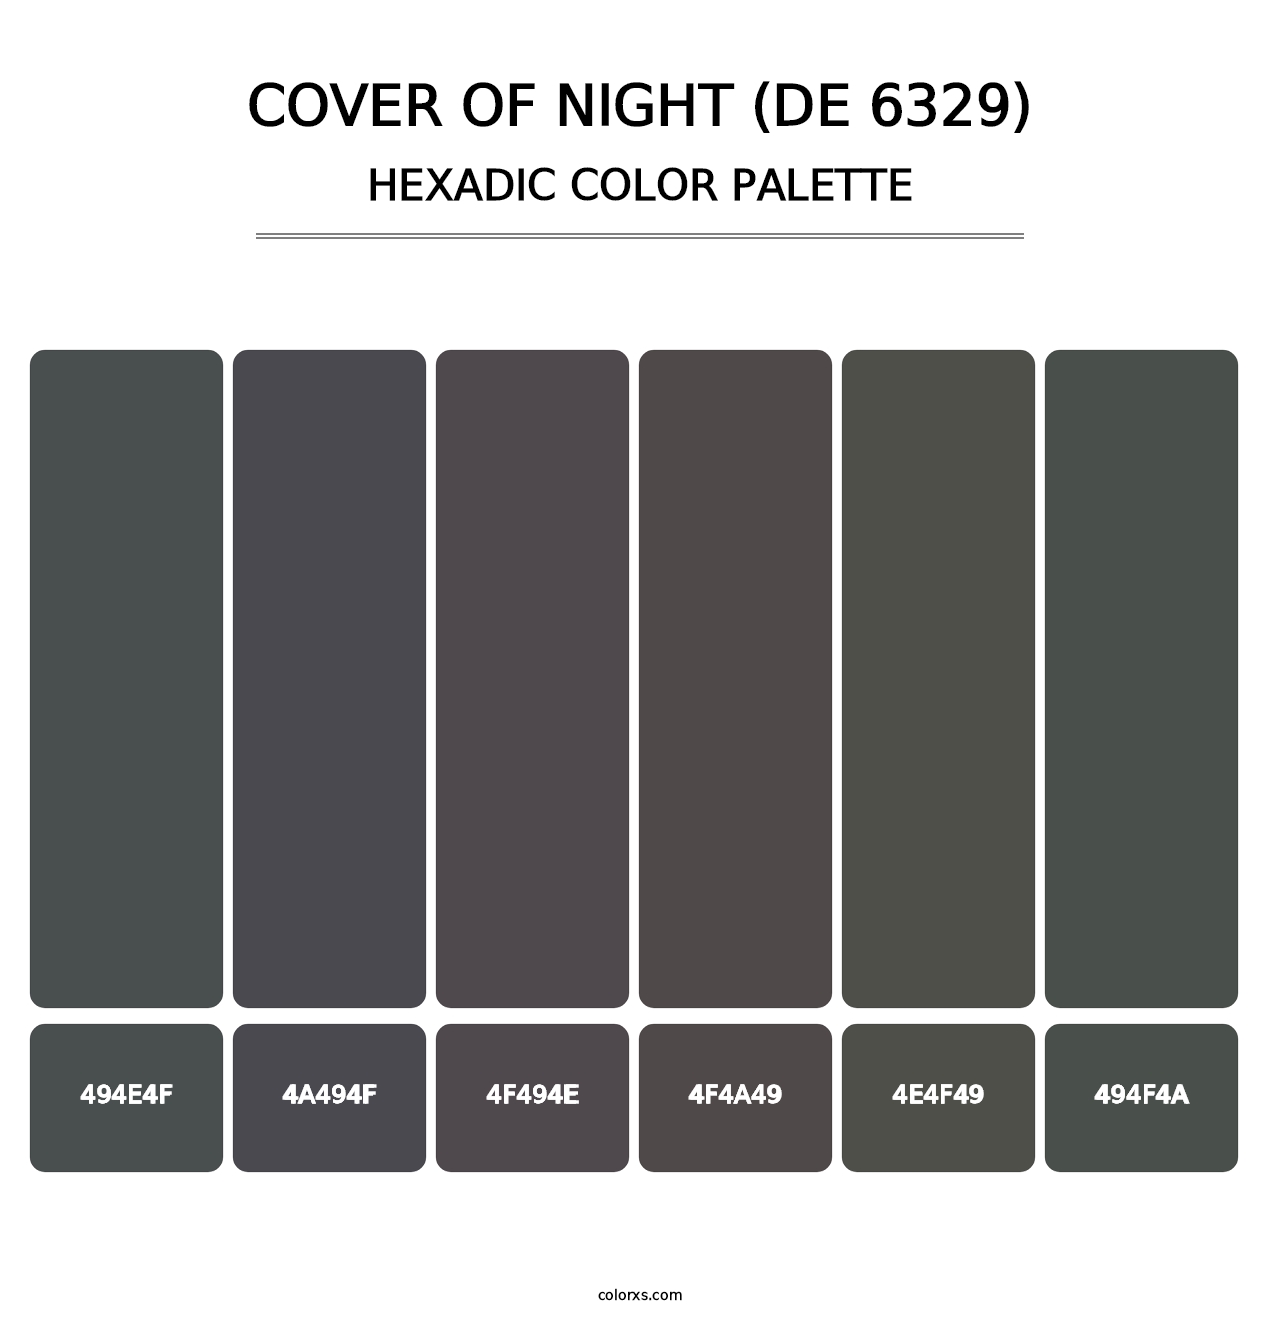 Cover of Night (DE 6329) - Hexadic Color Palette